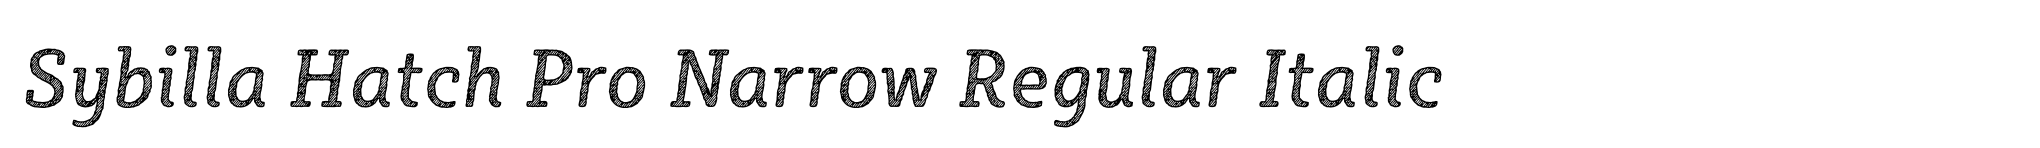 Sybilla Hatch Pro Narrow Regular Italic image